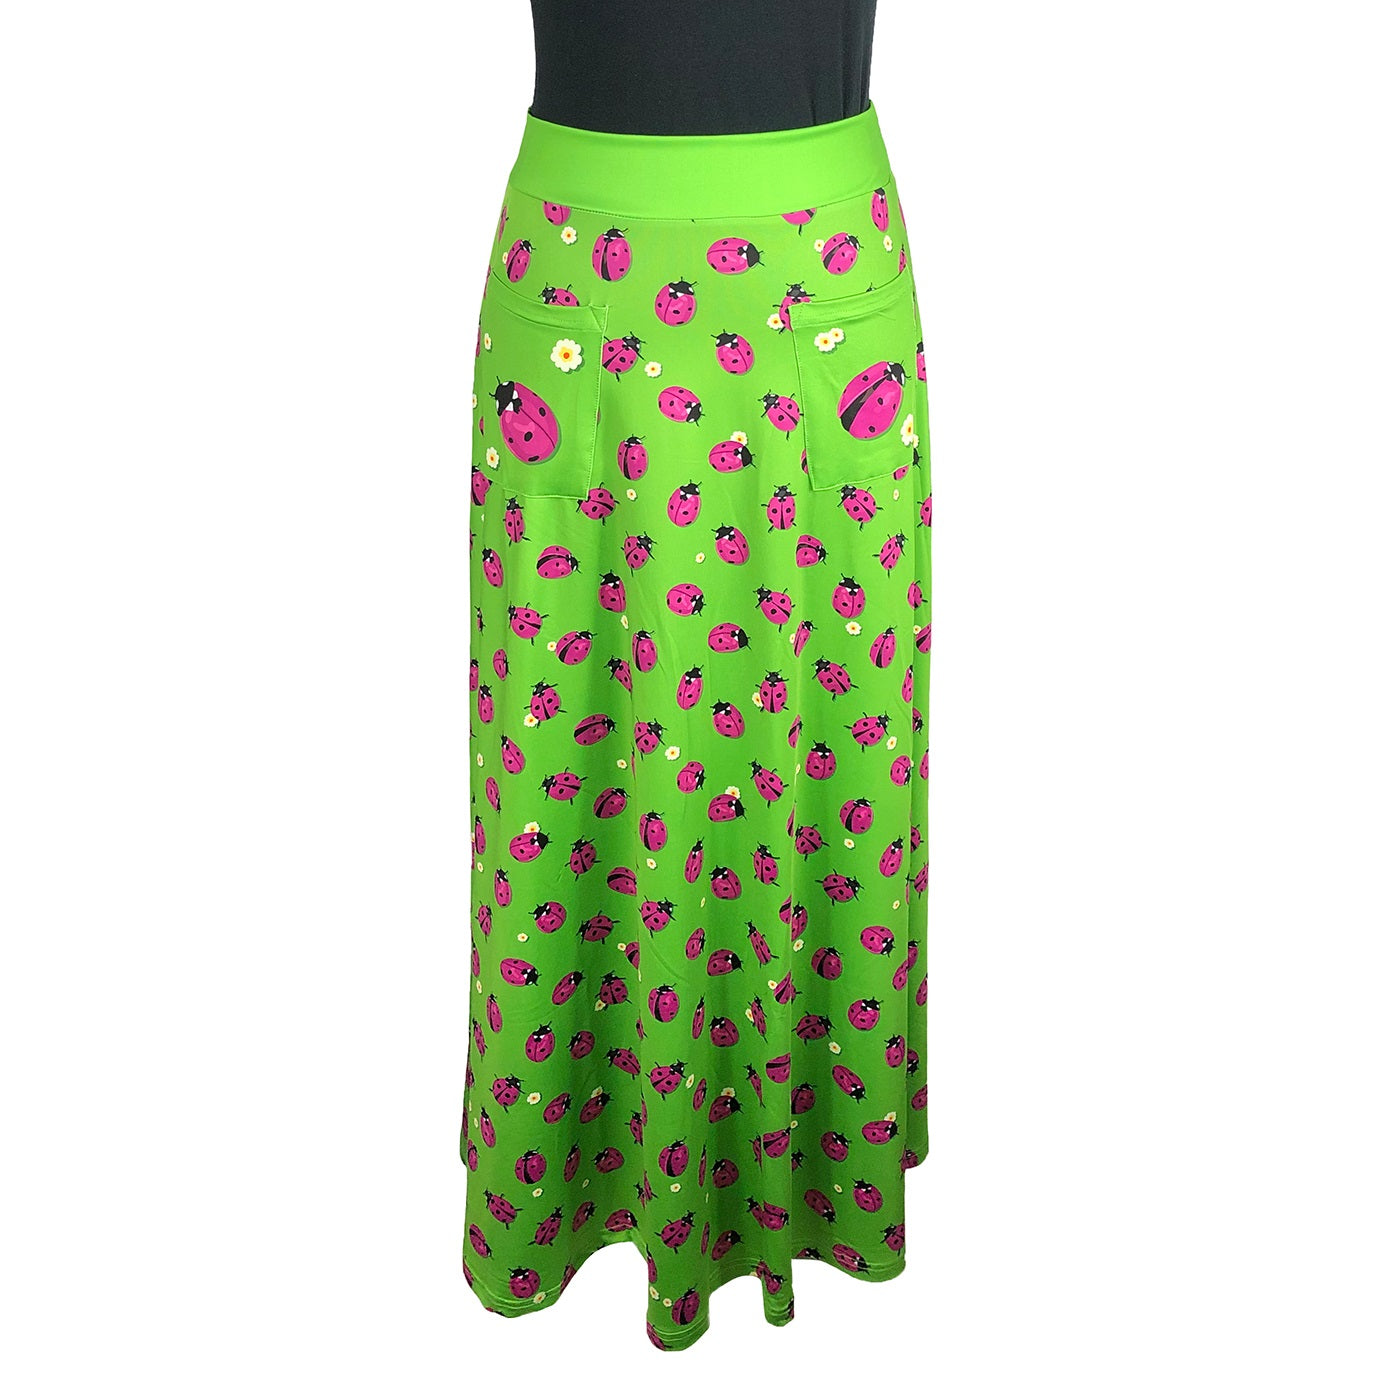 Loveliness Maxi Skirt by RainbowsAndFairies.com.au (Ladybugs - Lady Beetle - Animal Print - Skirt With Pockets - Boho - Mod Retro - Vintage Inspired) - SKU: CL_MAXIS_LOVLY_ORG - Pic-01